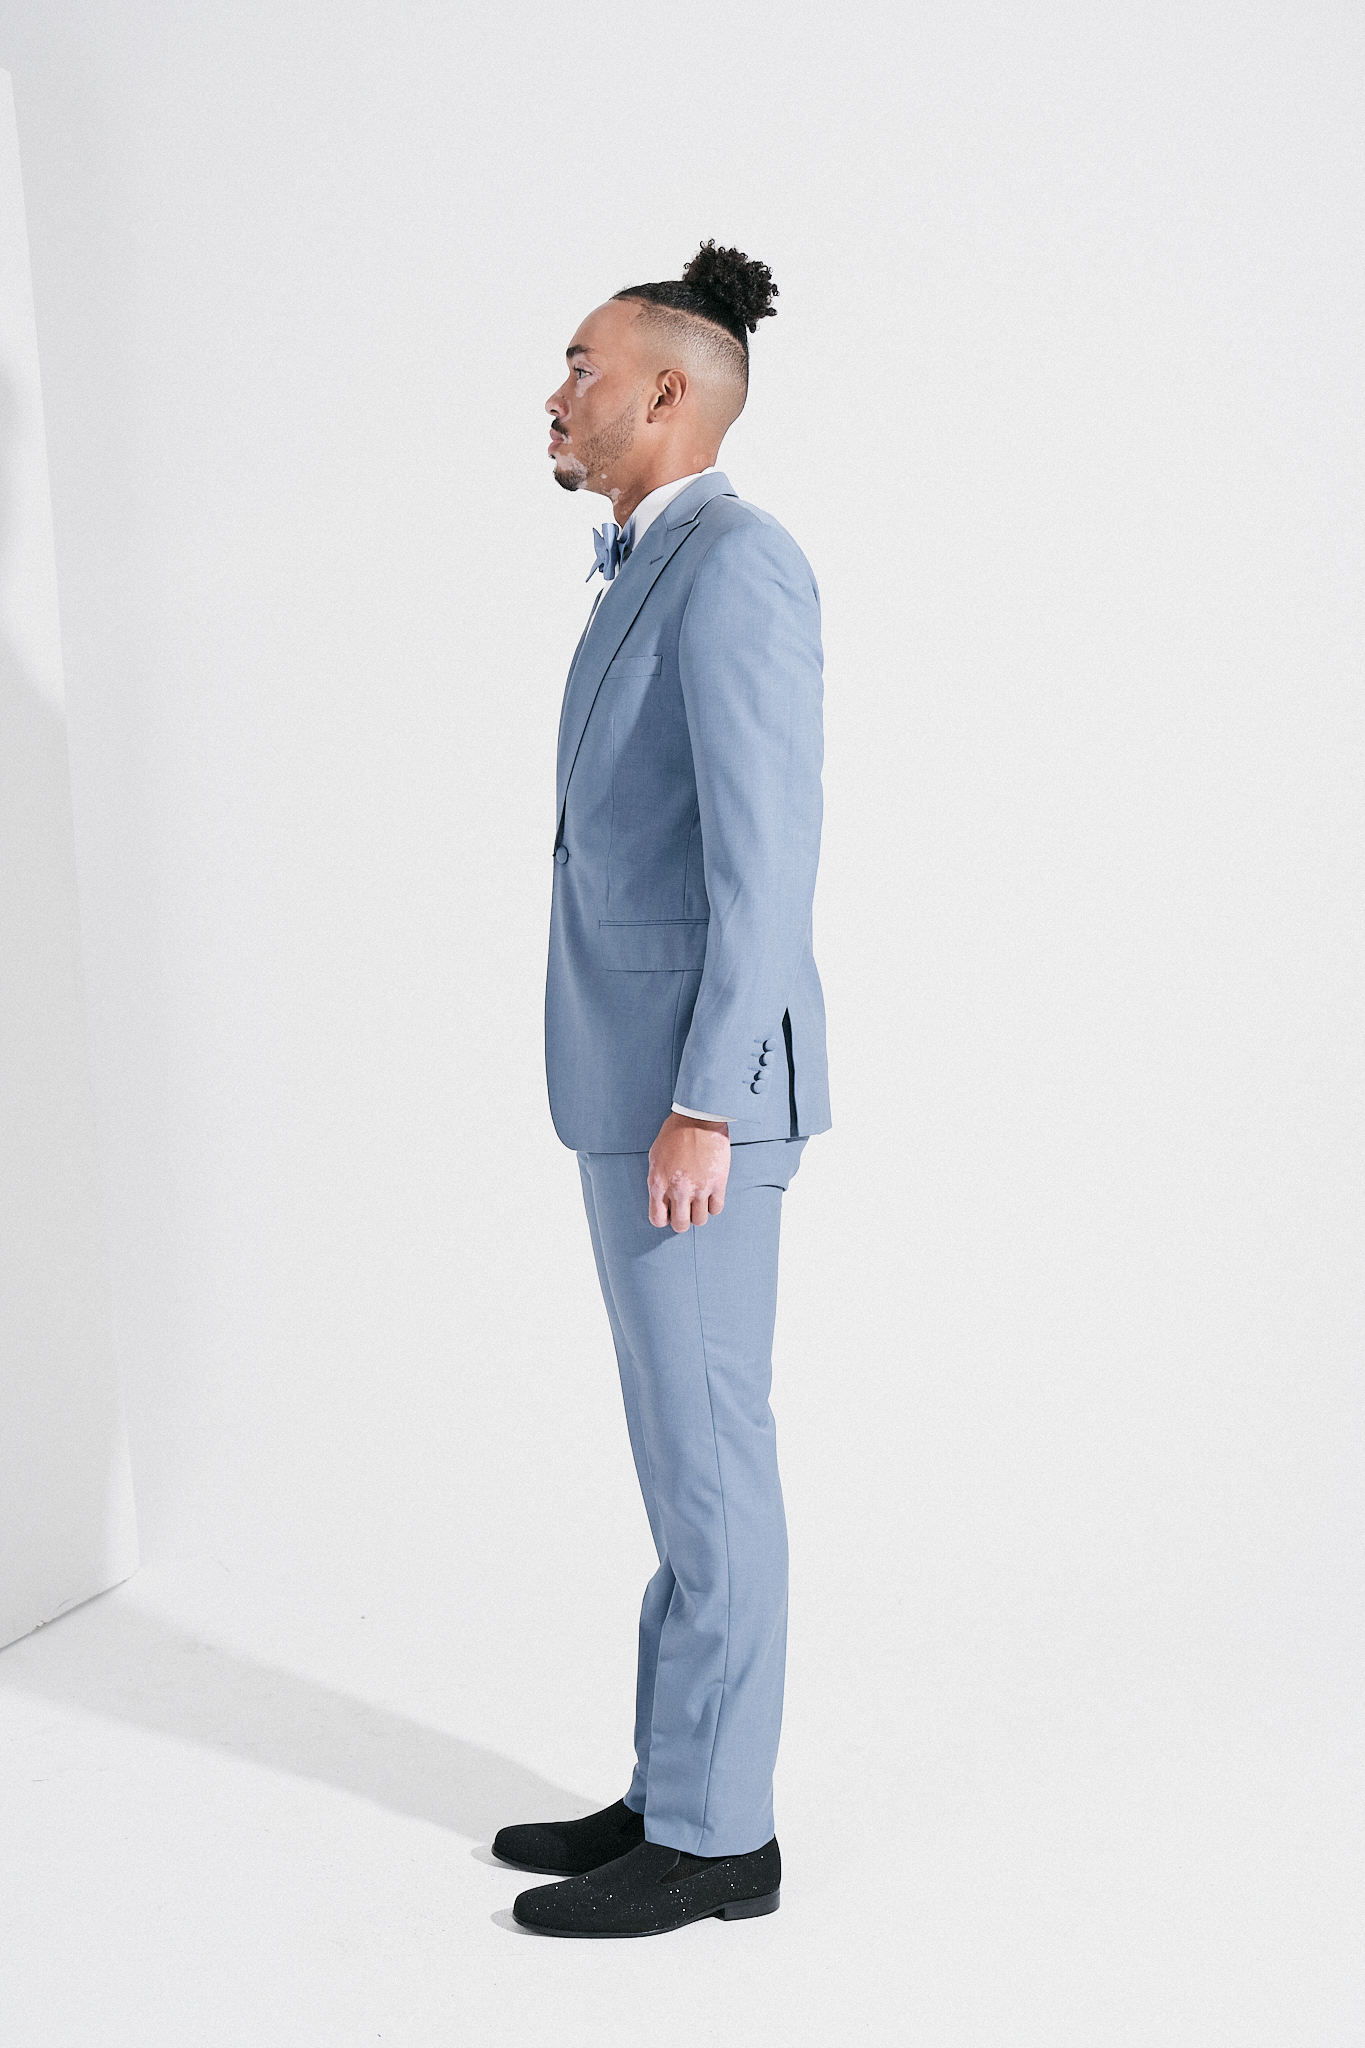 Jack Jones Premium Slim Fit Suit Jacket In Light Blue, 43% OFF